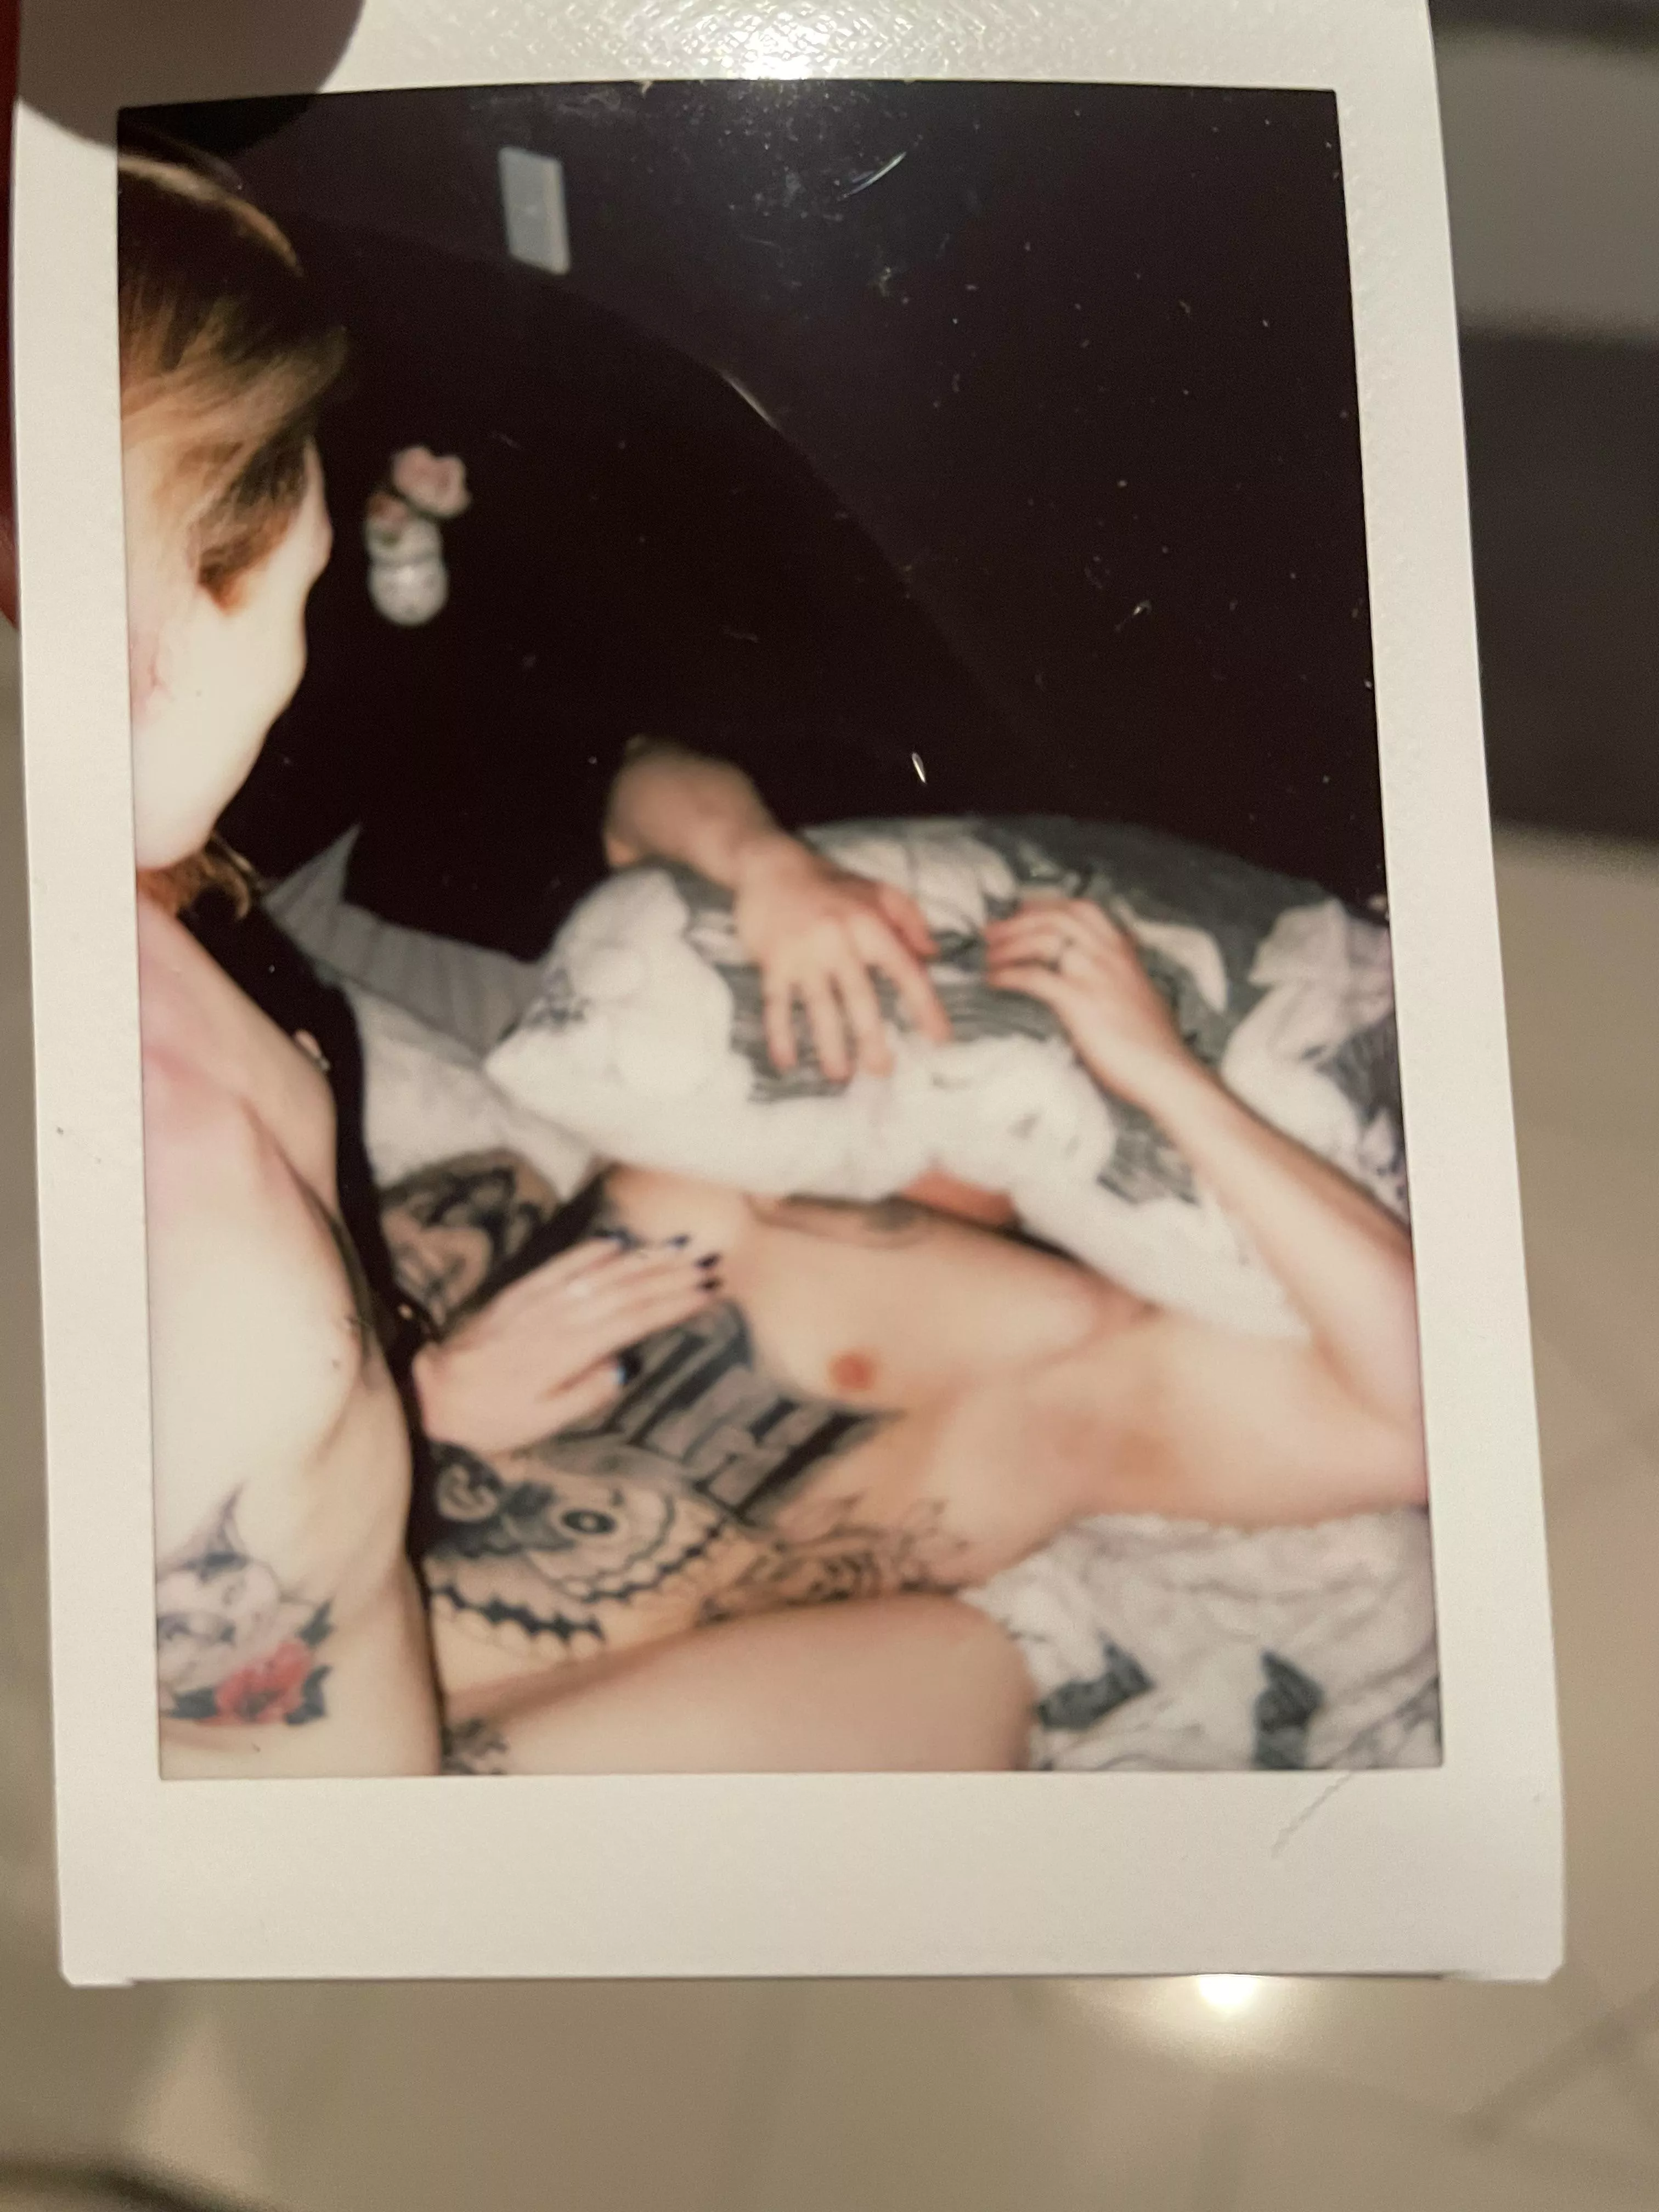 Fun with Polaroids (M29F28) nudes couplesgonewild NUDE-PICS photo